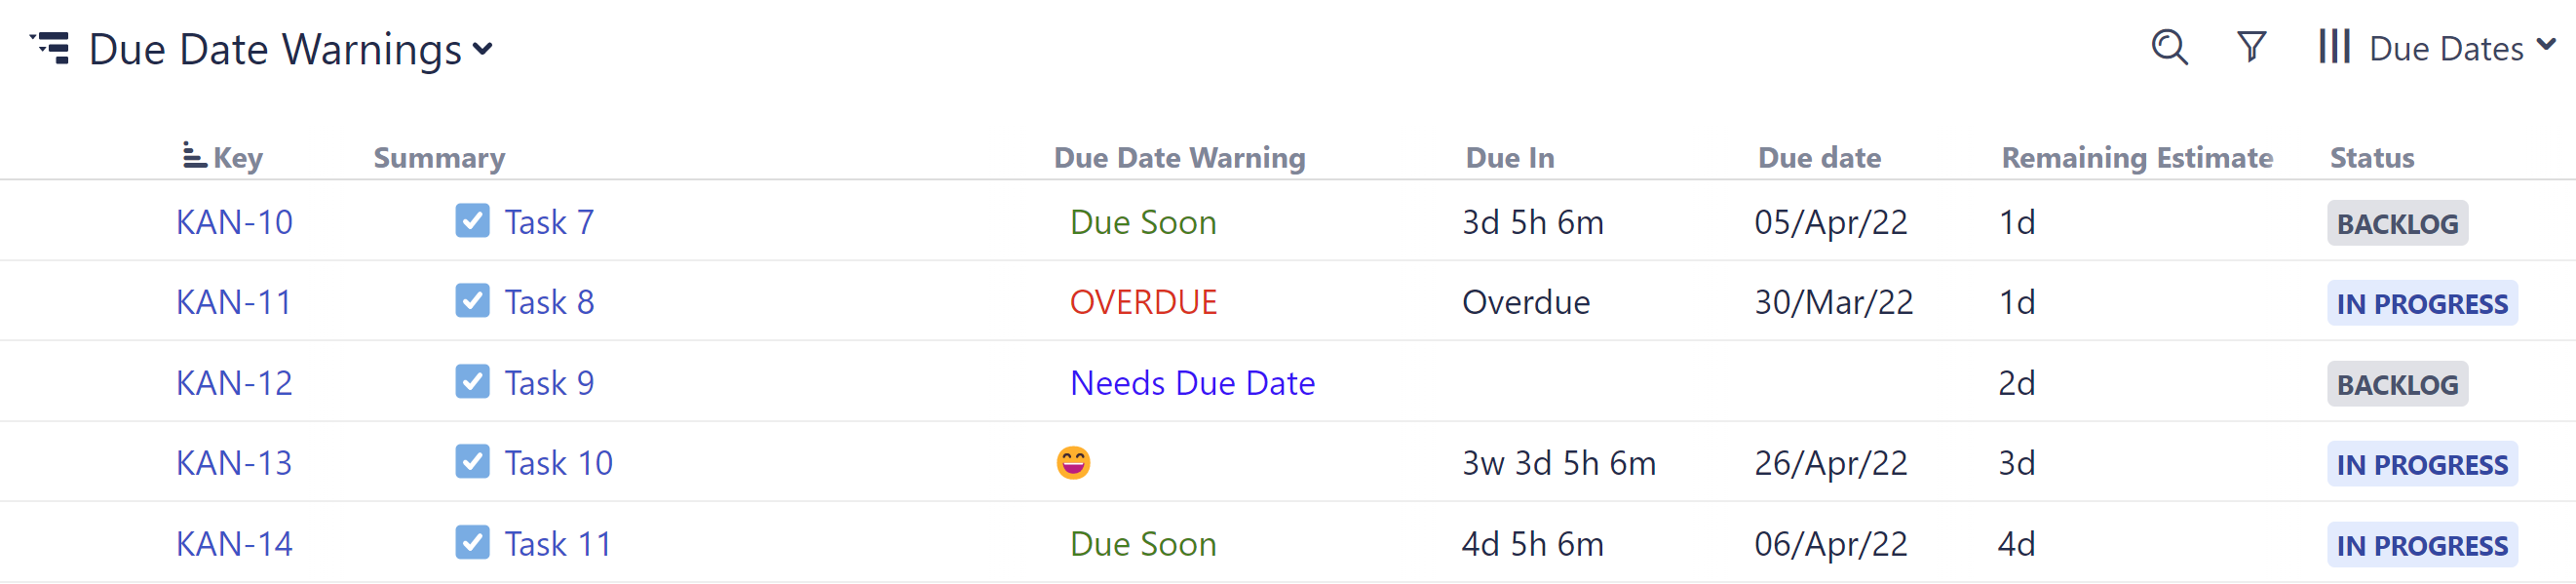 Due date warnings